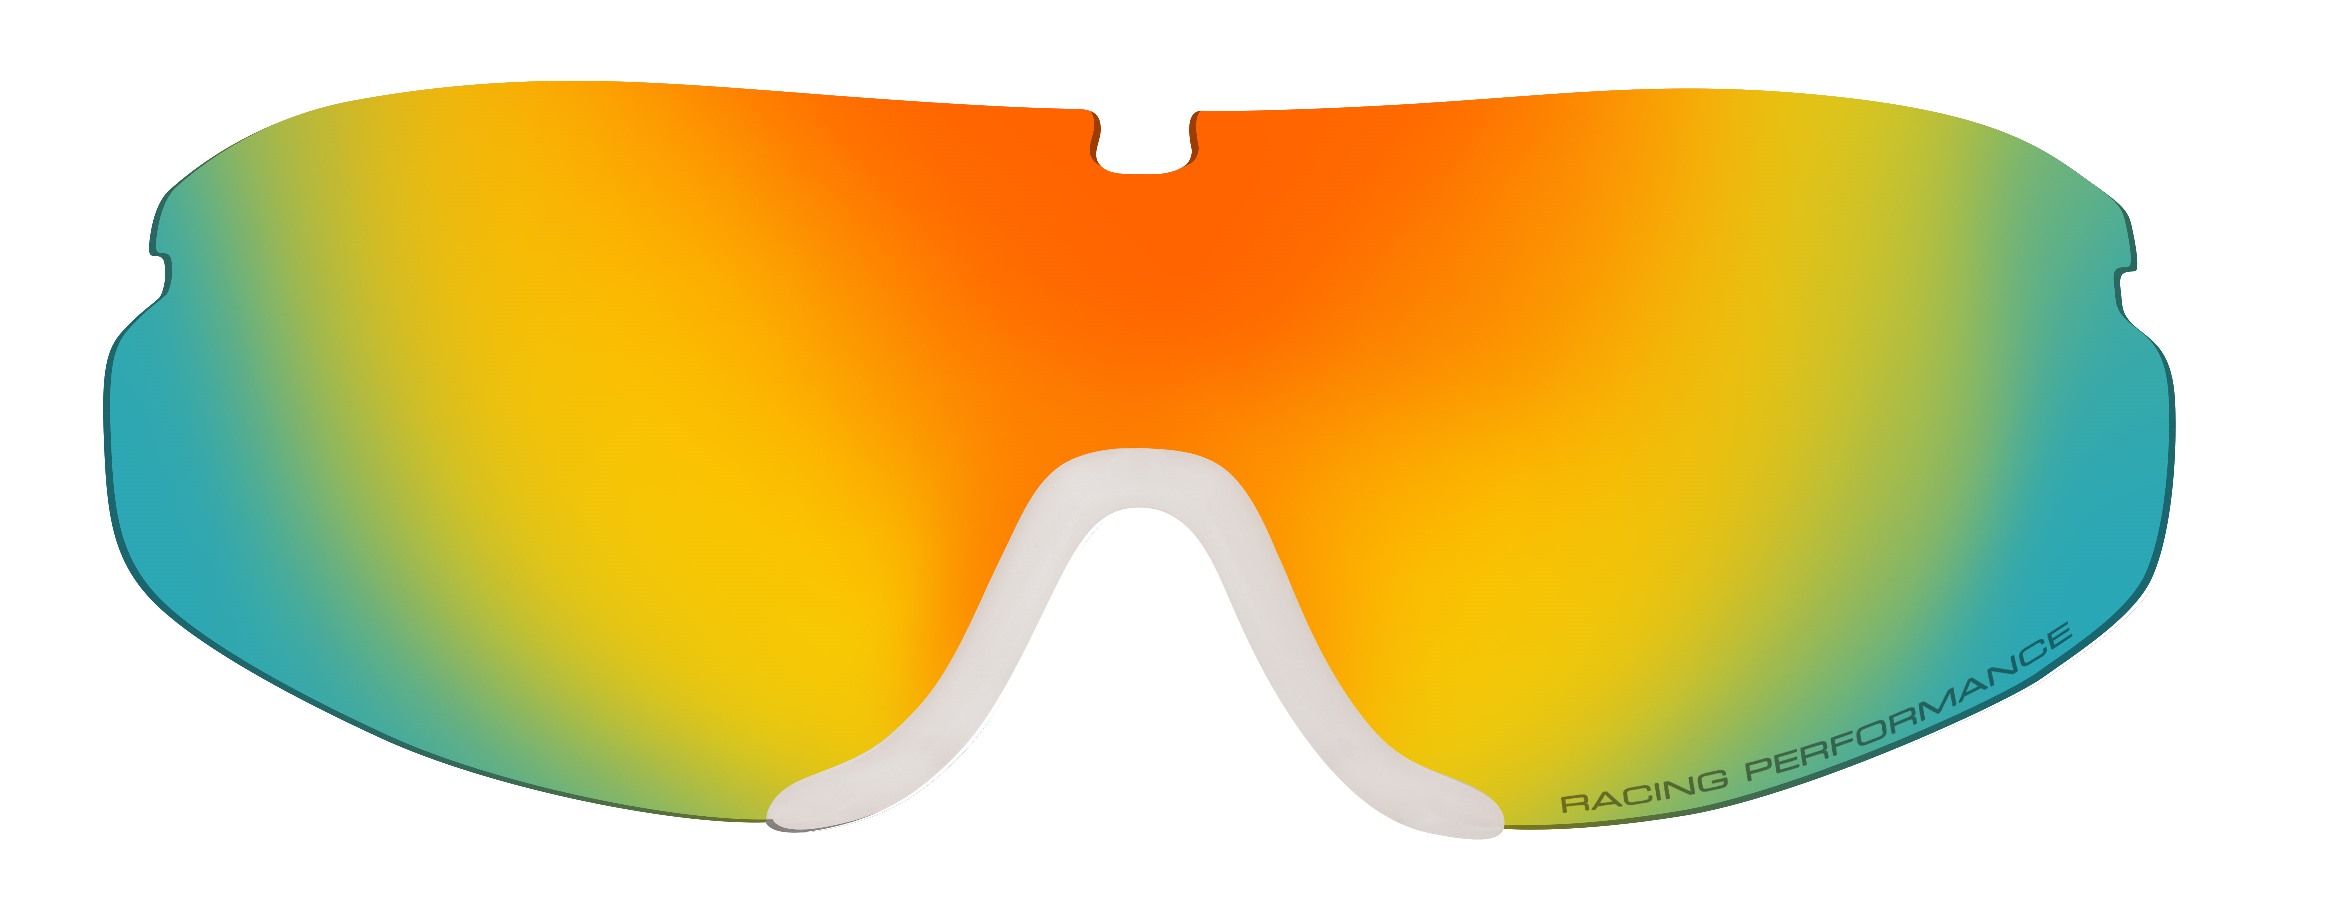 HTGL34/BR Náhradní čočka k lyžařským brýlím CROSS HTG34 hnědá